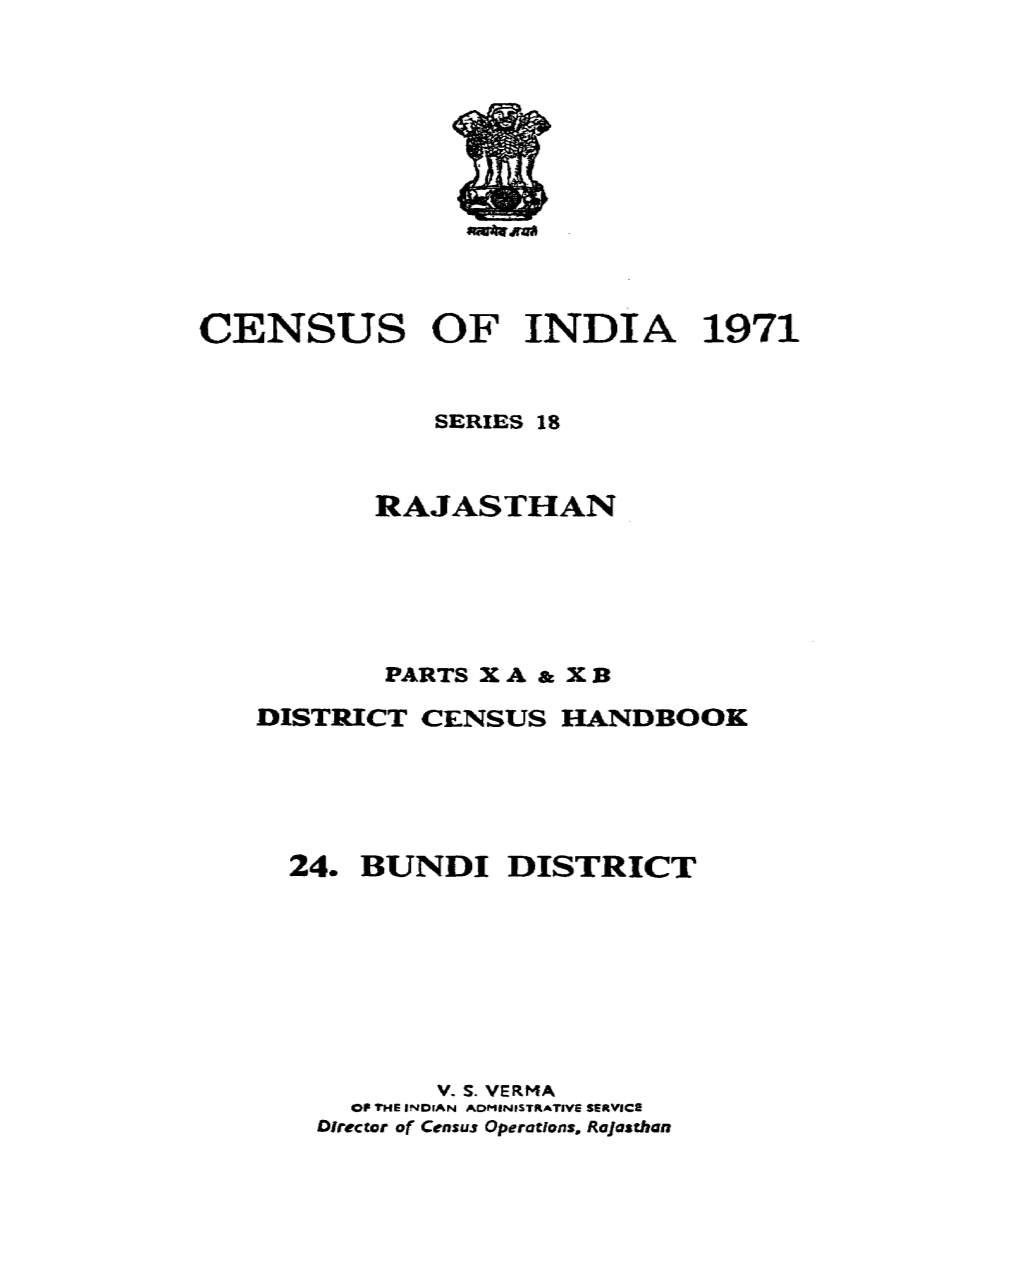 District Census Handbook 24-Bundi, Part X a & XB, Series-18, Rajasthan